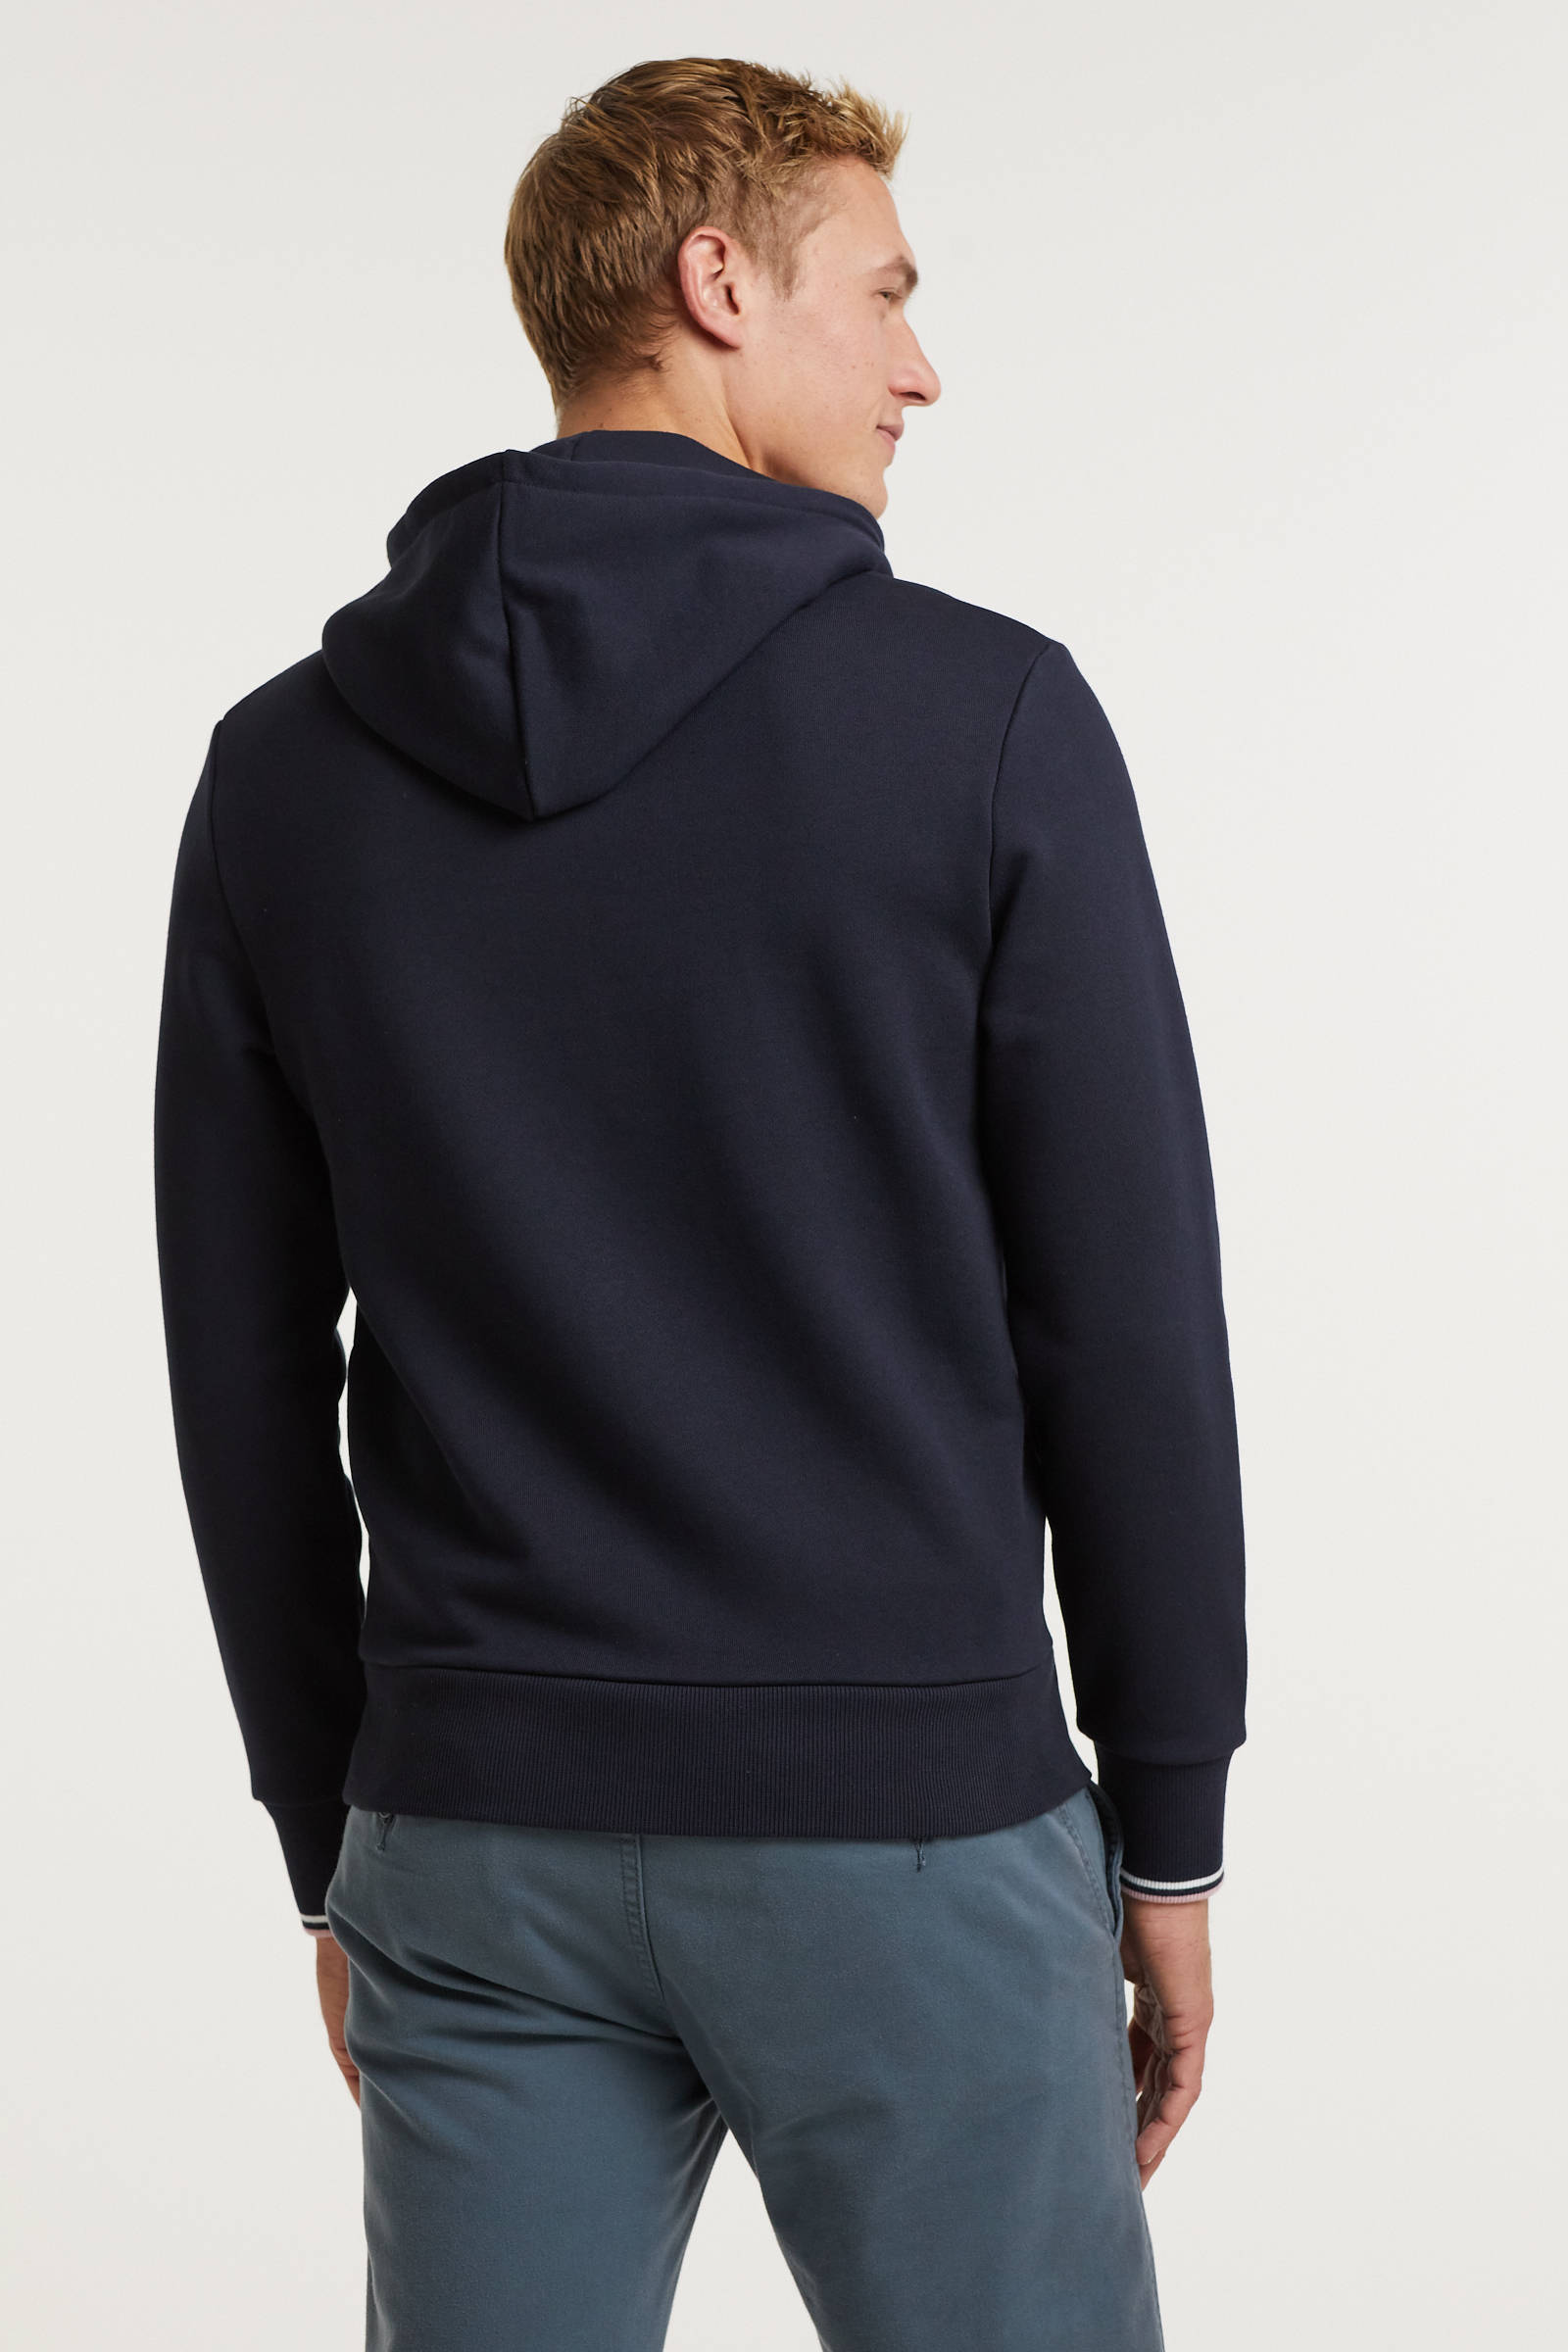 Fred Perry Donkerblauwe Sweater Tipped Hooded Sweatshirt online kopen